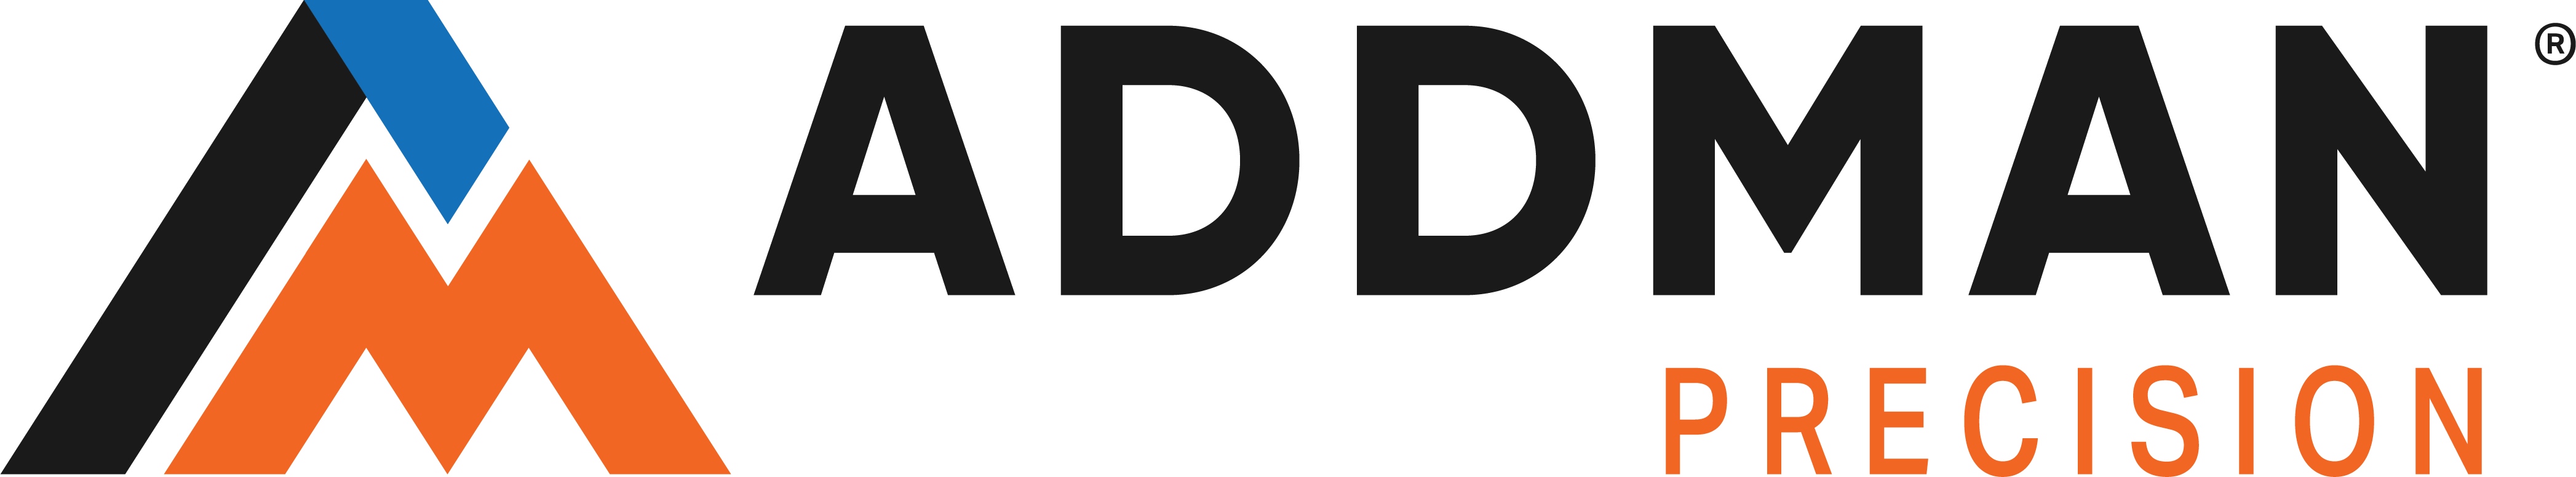 ADDMAN Precision Logo